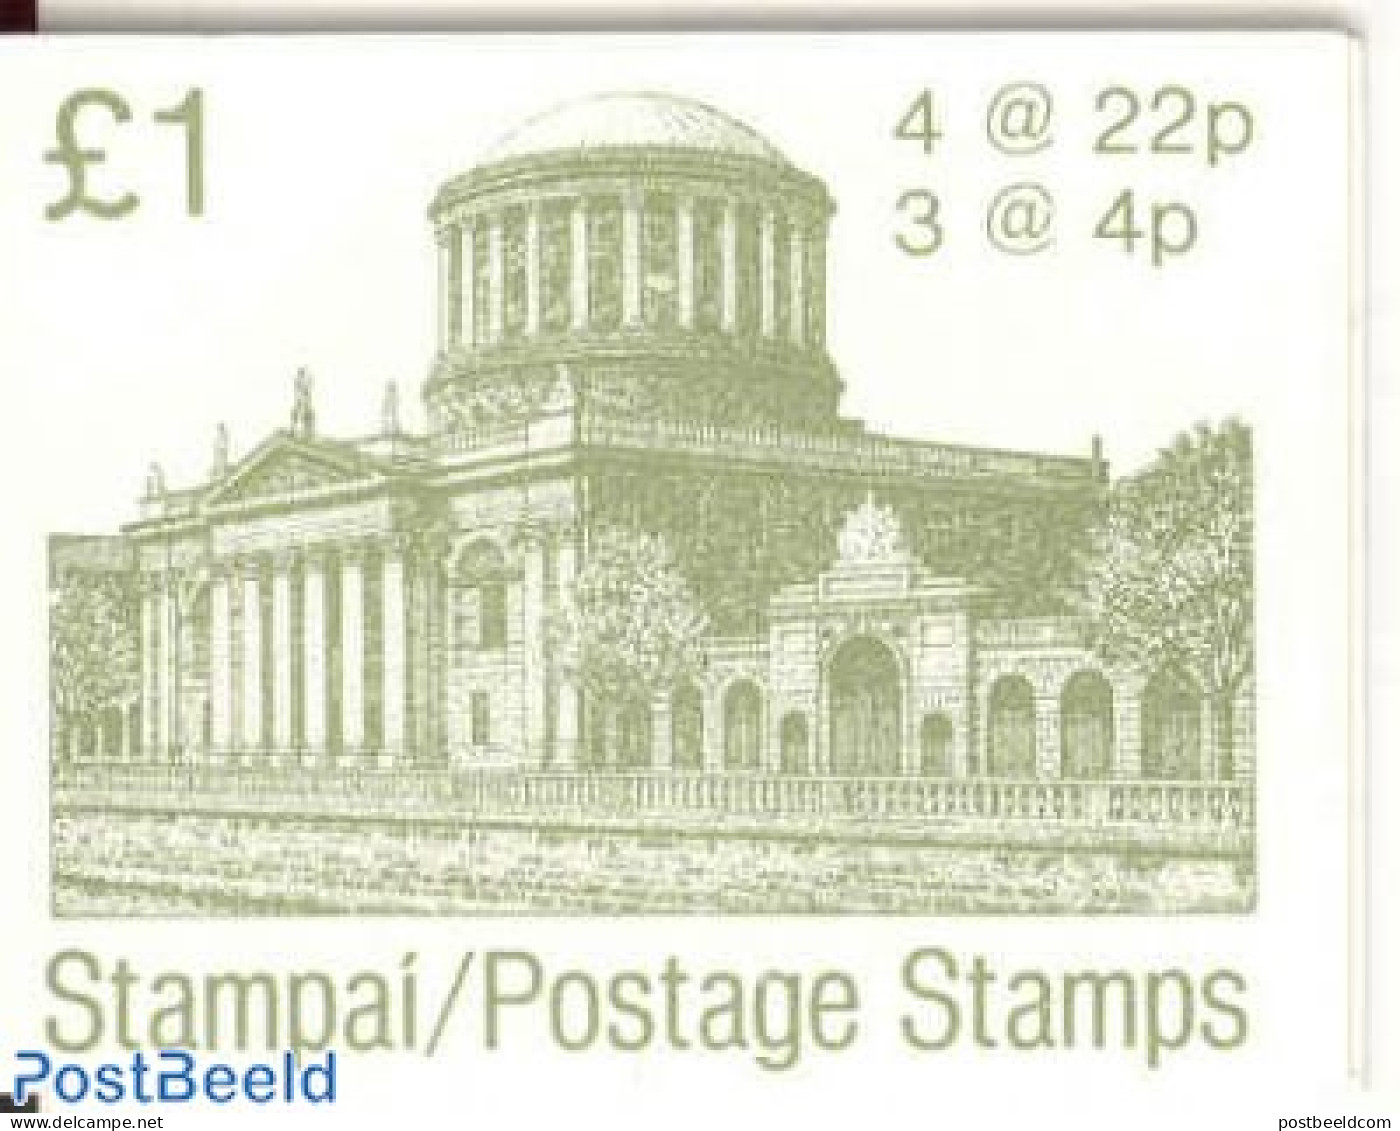 Ireland 1983 Architecture Booklet, Mint NH, Stamp Booklets - Ongebruikt